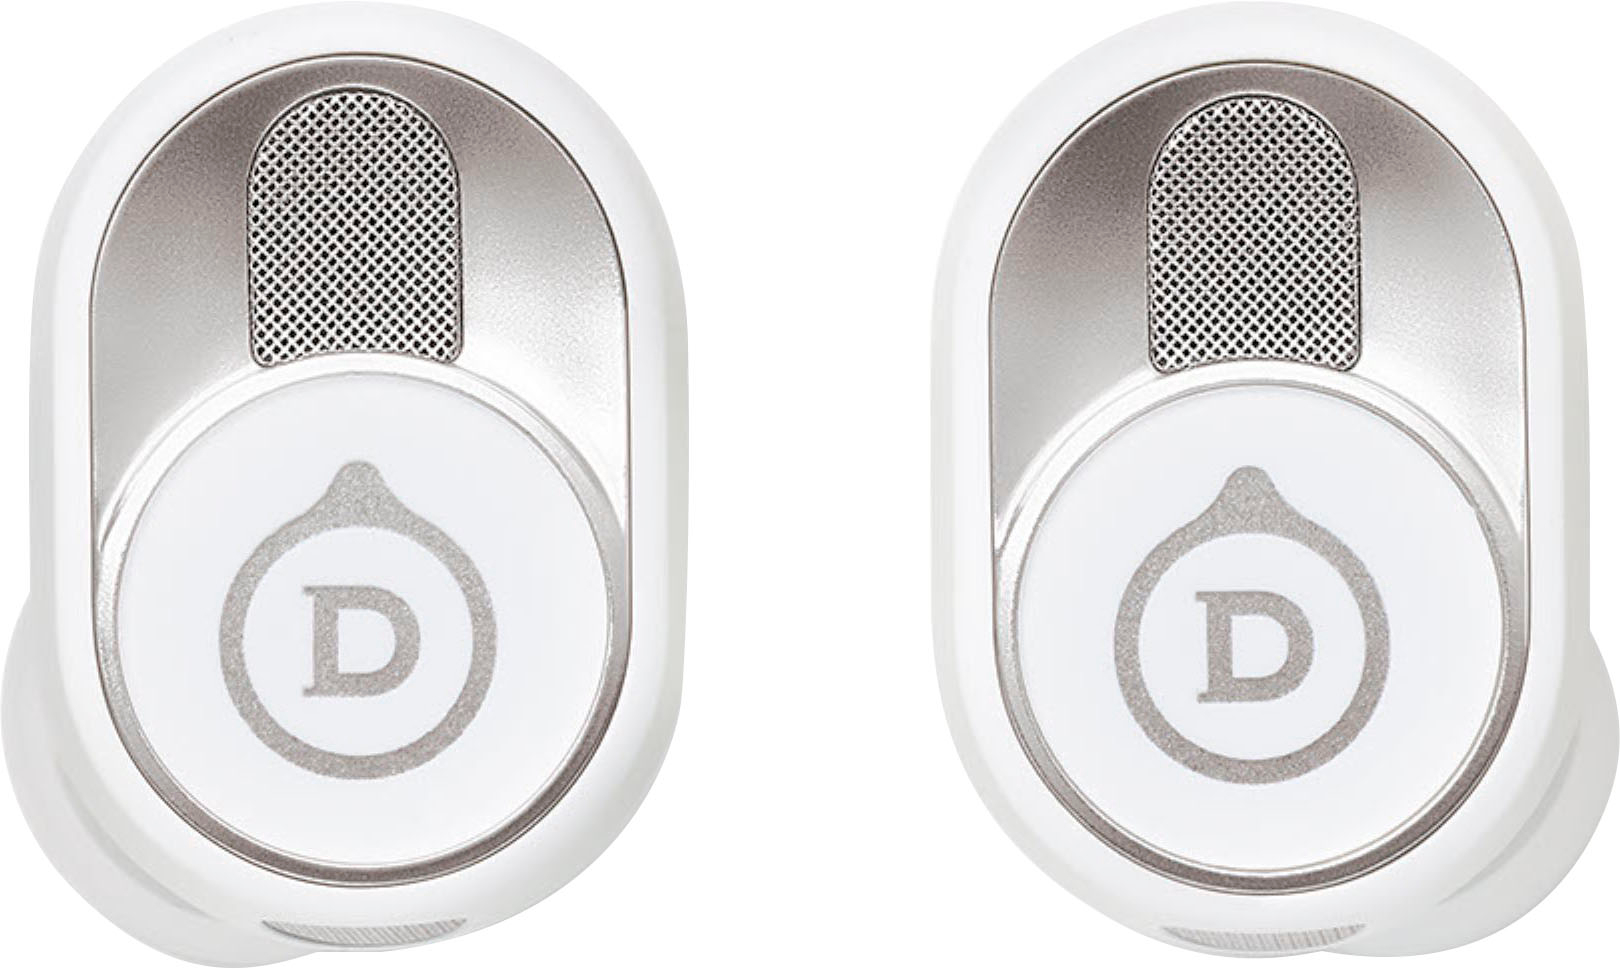 Devialet's Gemini II TWS Earbuds look like Tiny Versions of their